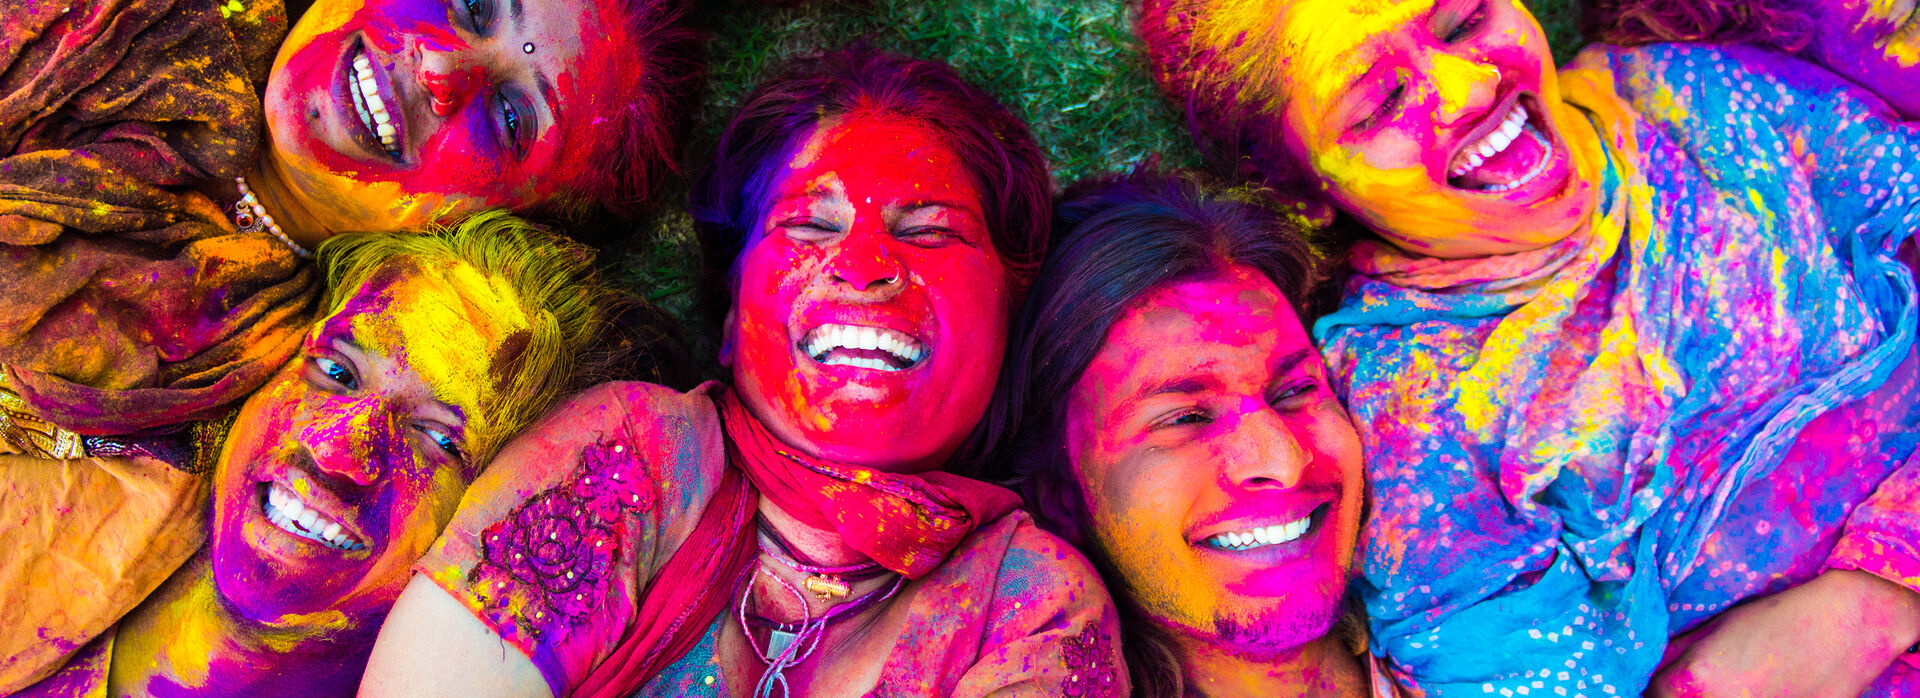 People smiling during Holi